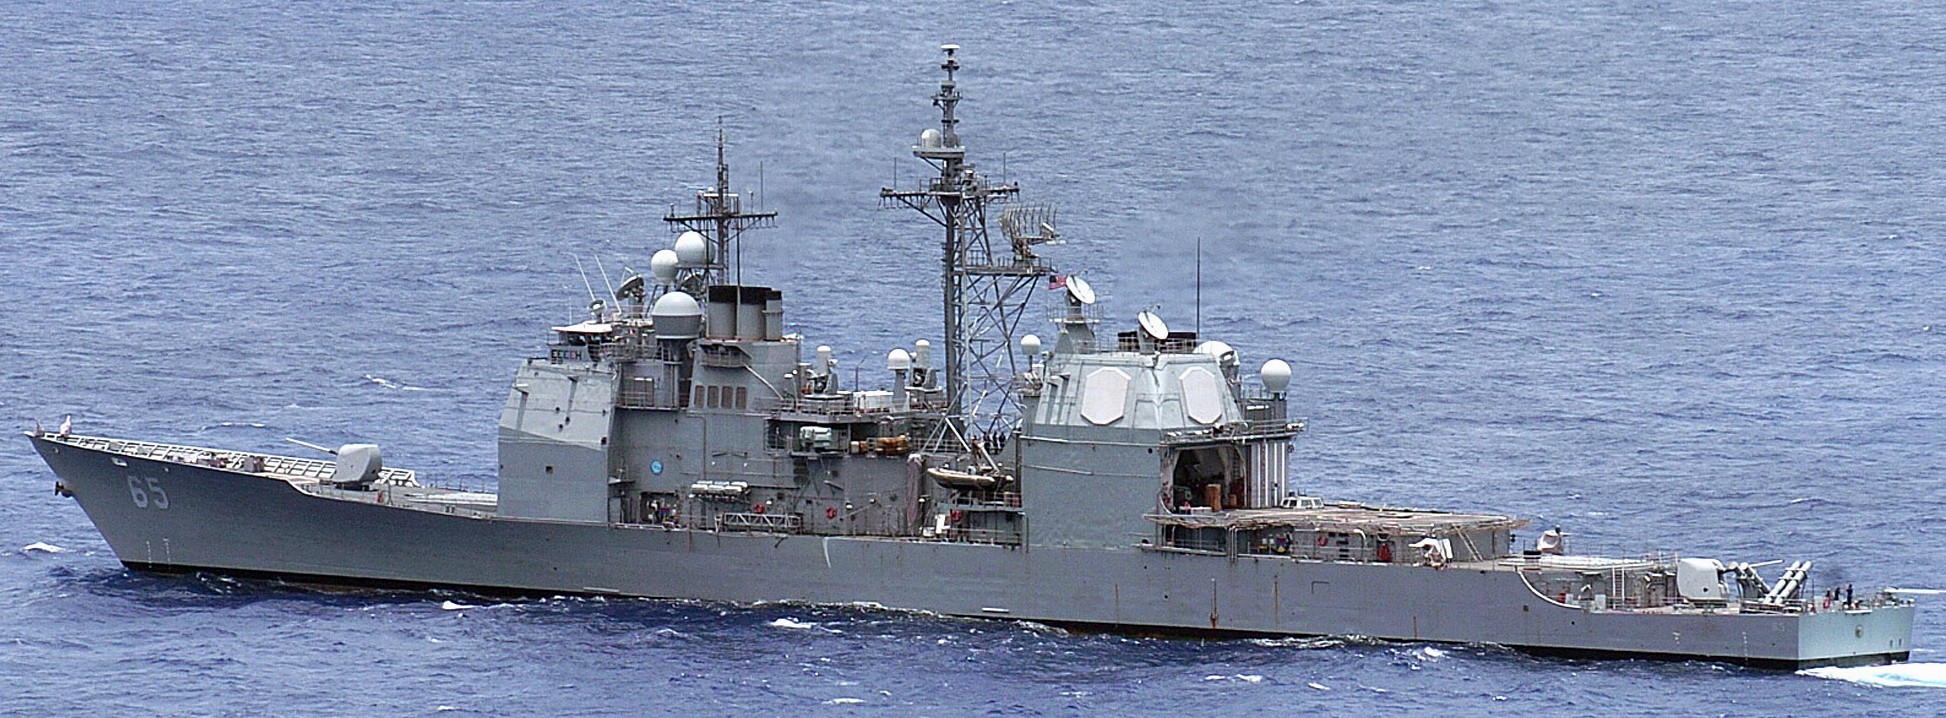 cg-65 uss chosin ticonderoga class guided missile cruiser aegis us navy 14